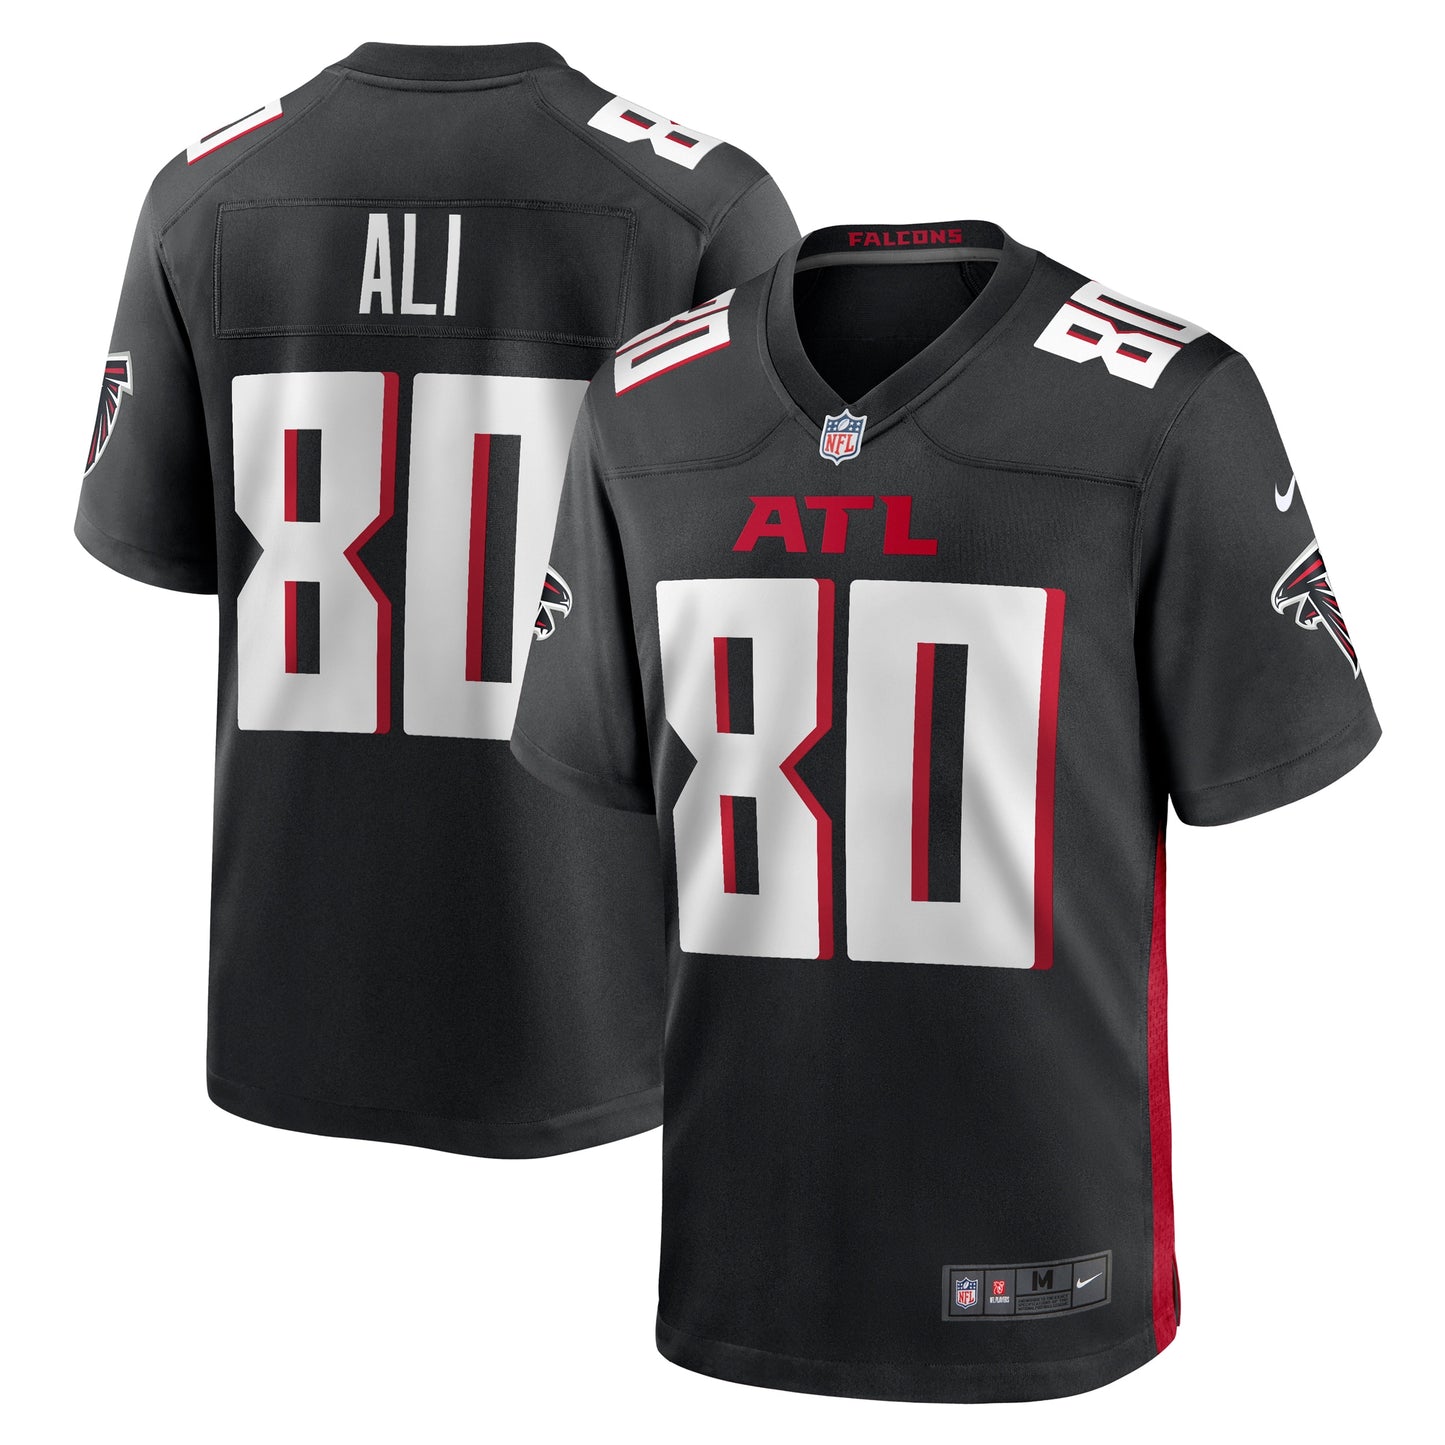 Josh Ali Atlanta Falcons Nike Team Game Jersey - Black